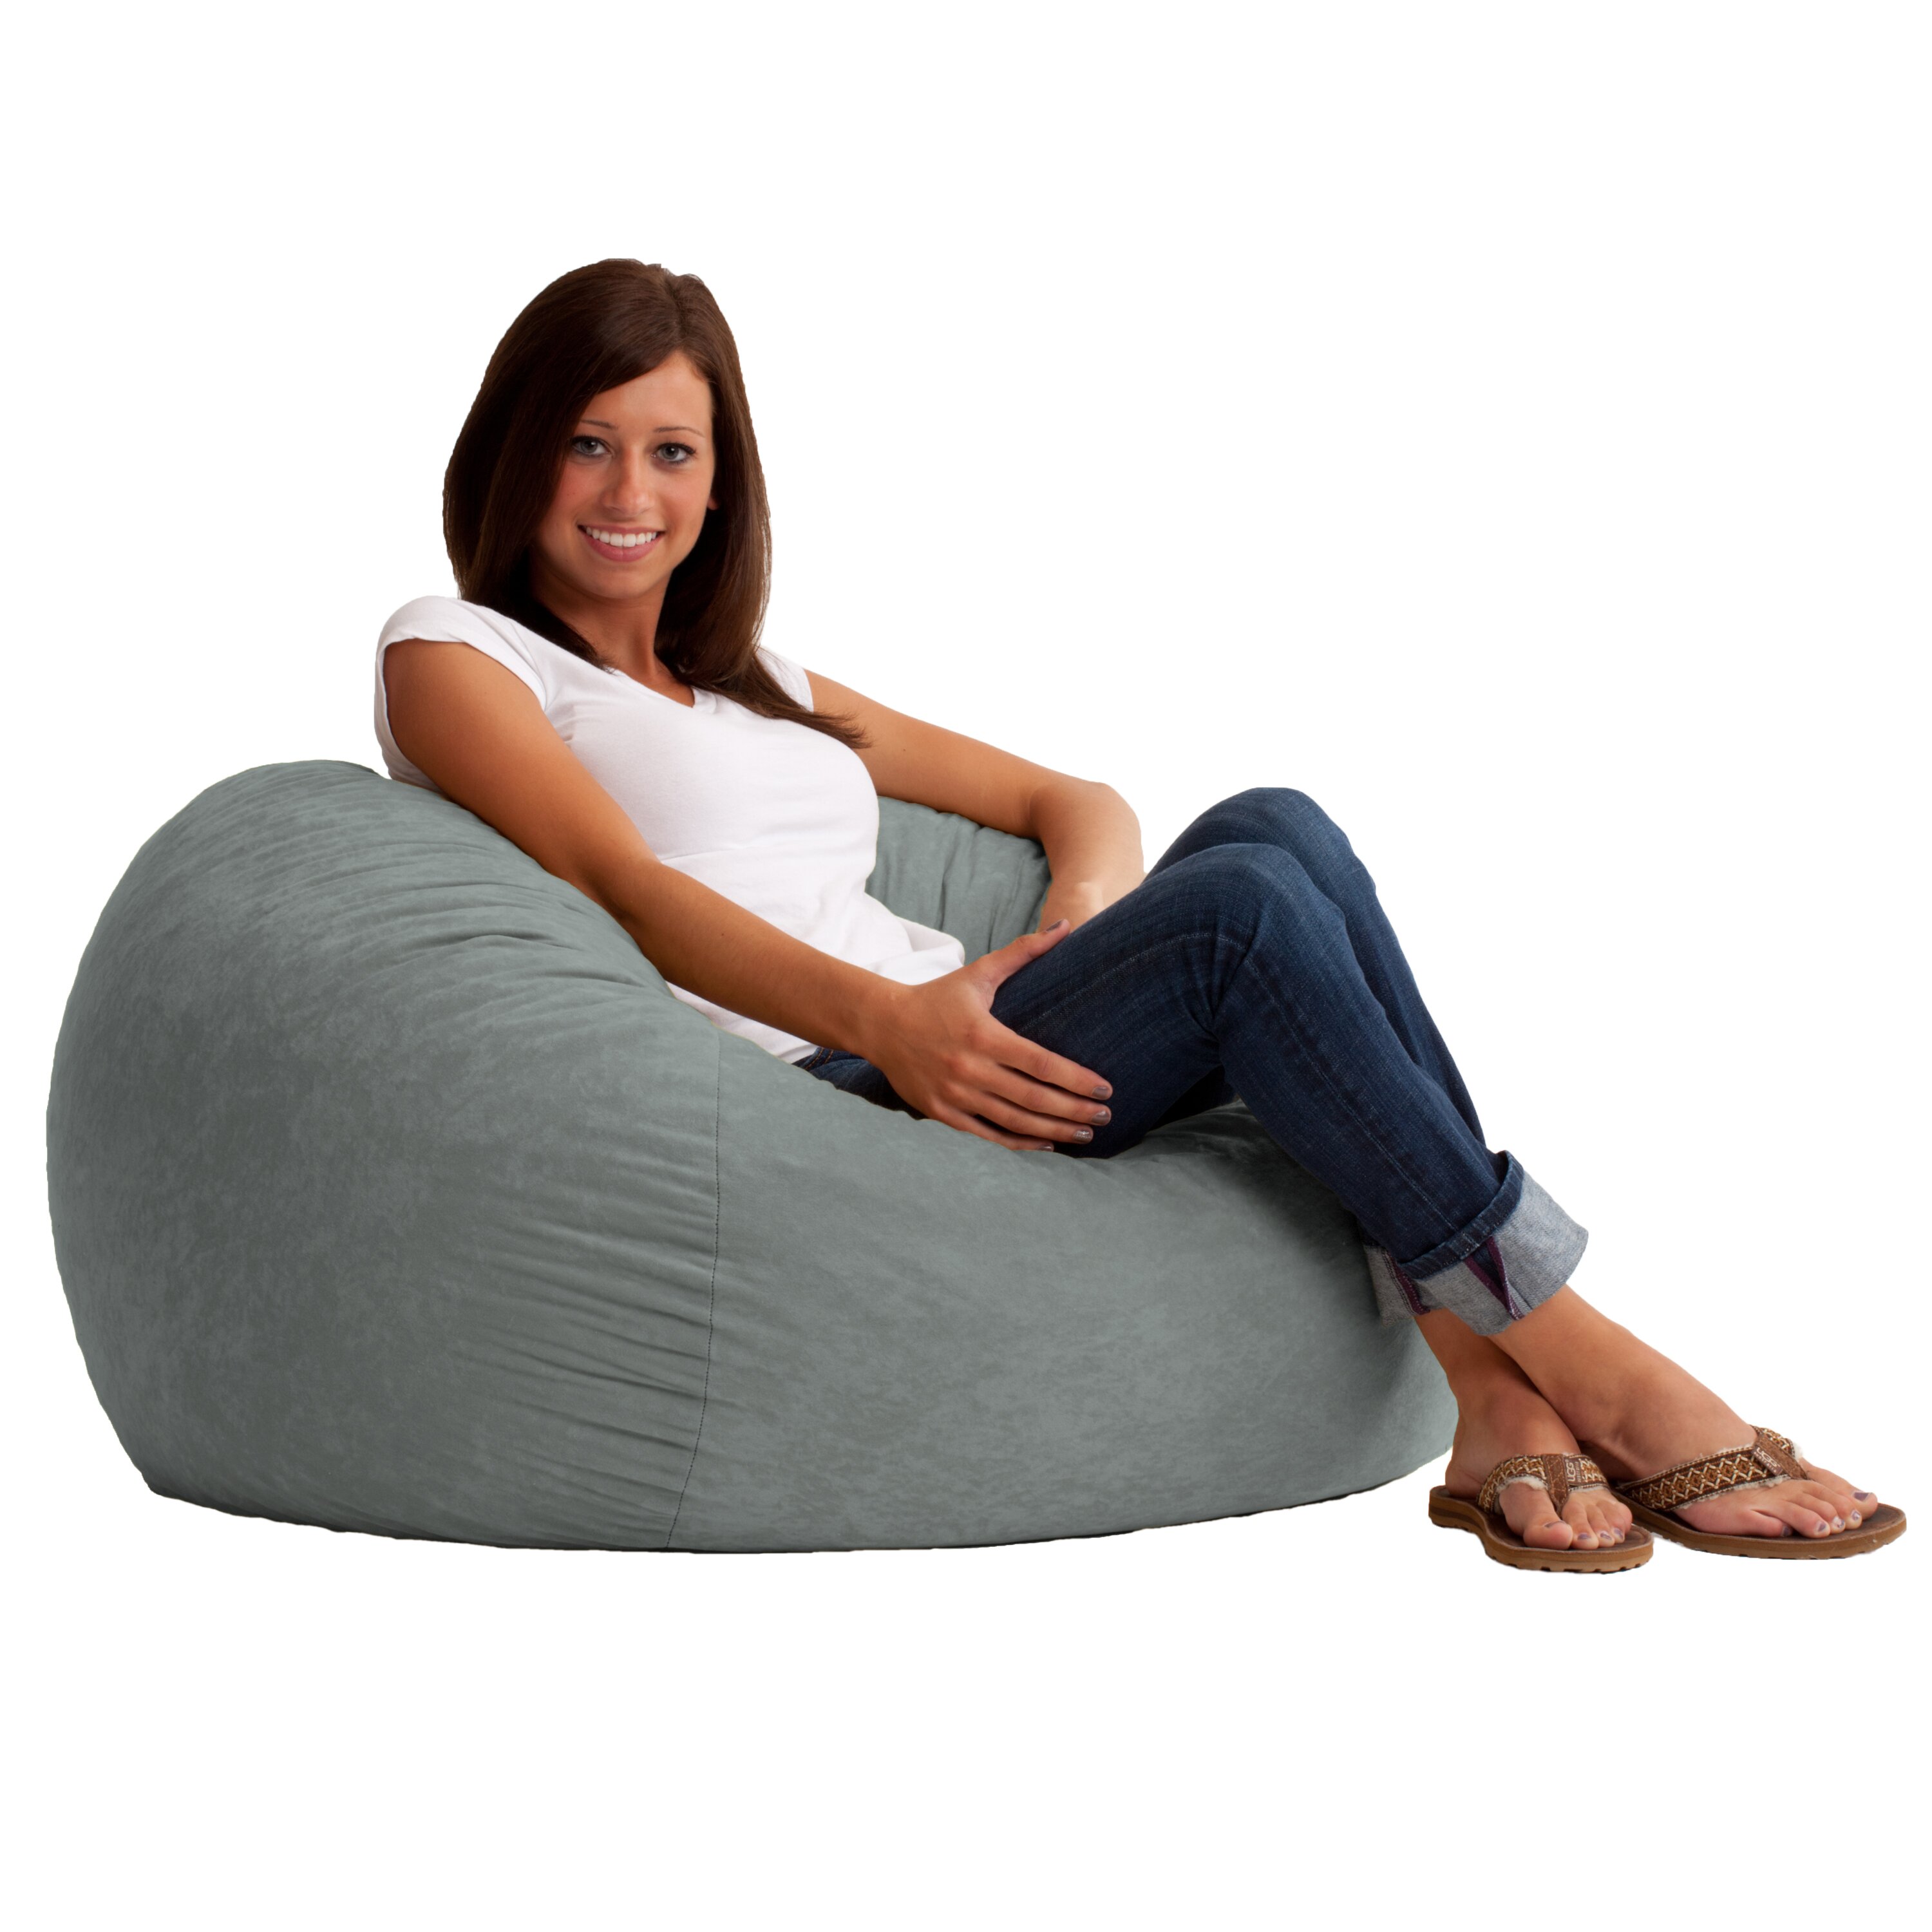 Comfort Research Fuf Bean Bag Chair & Reviews | Wayfair